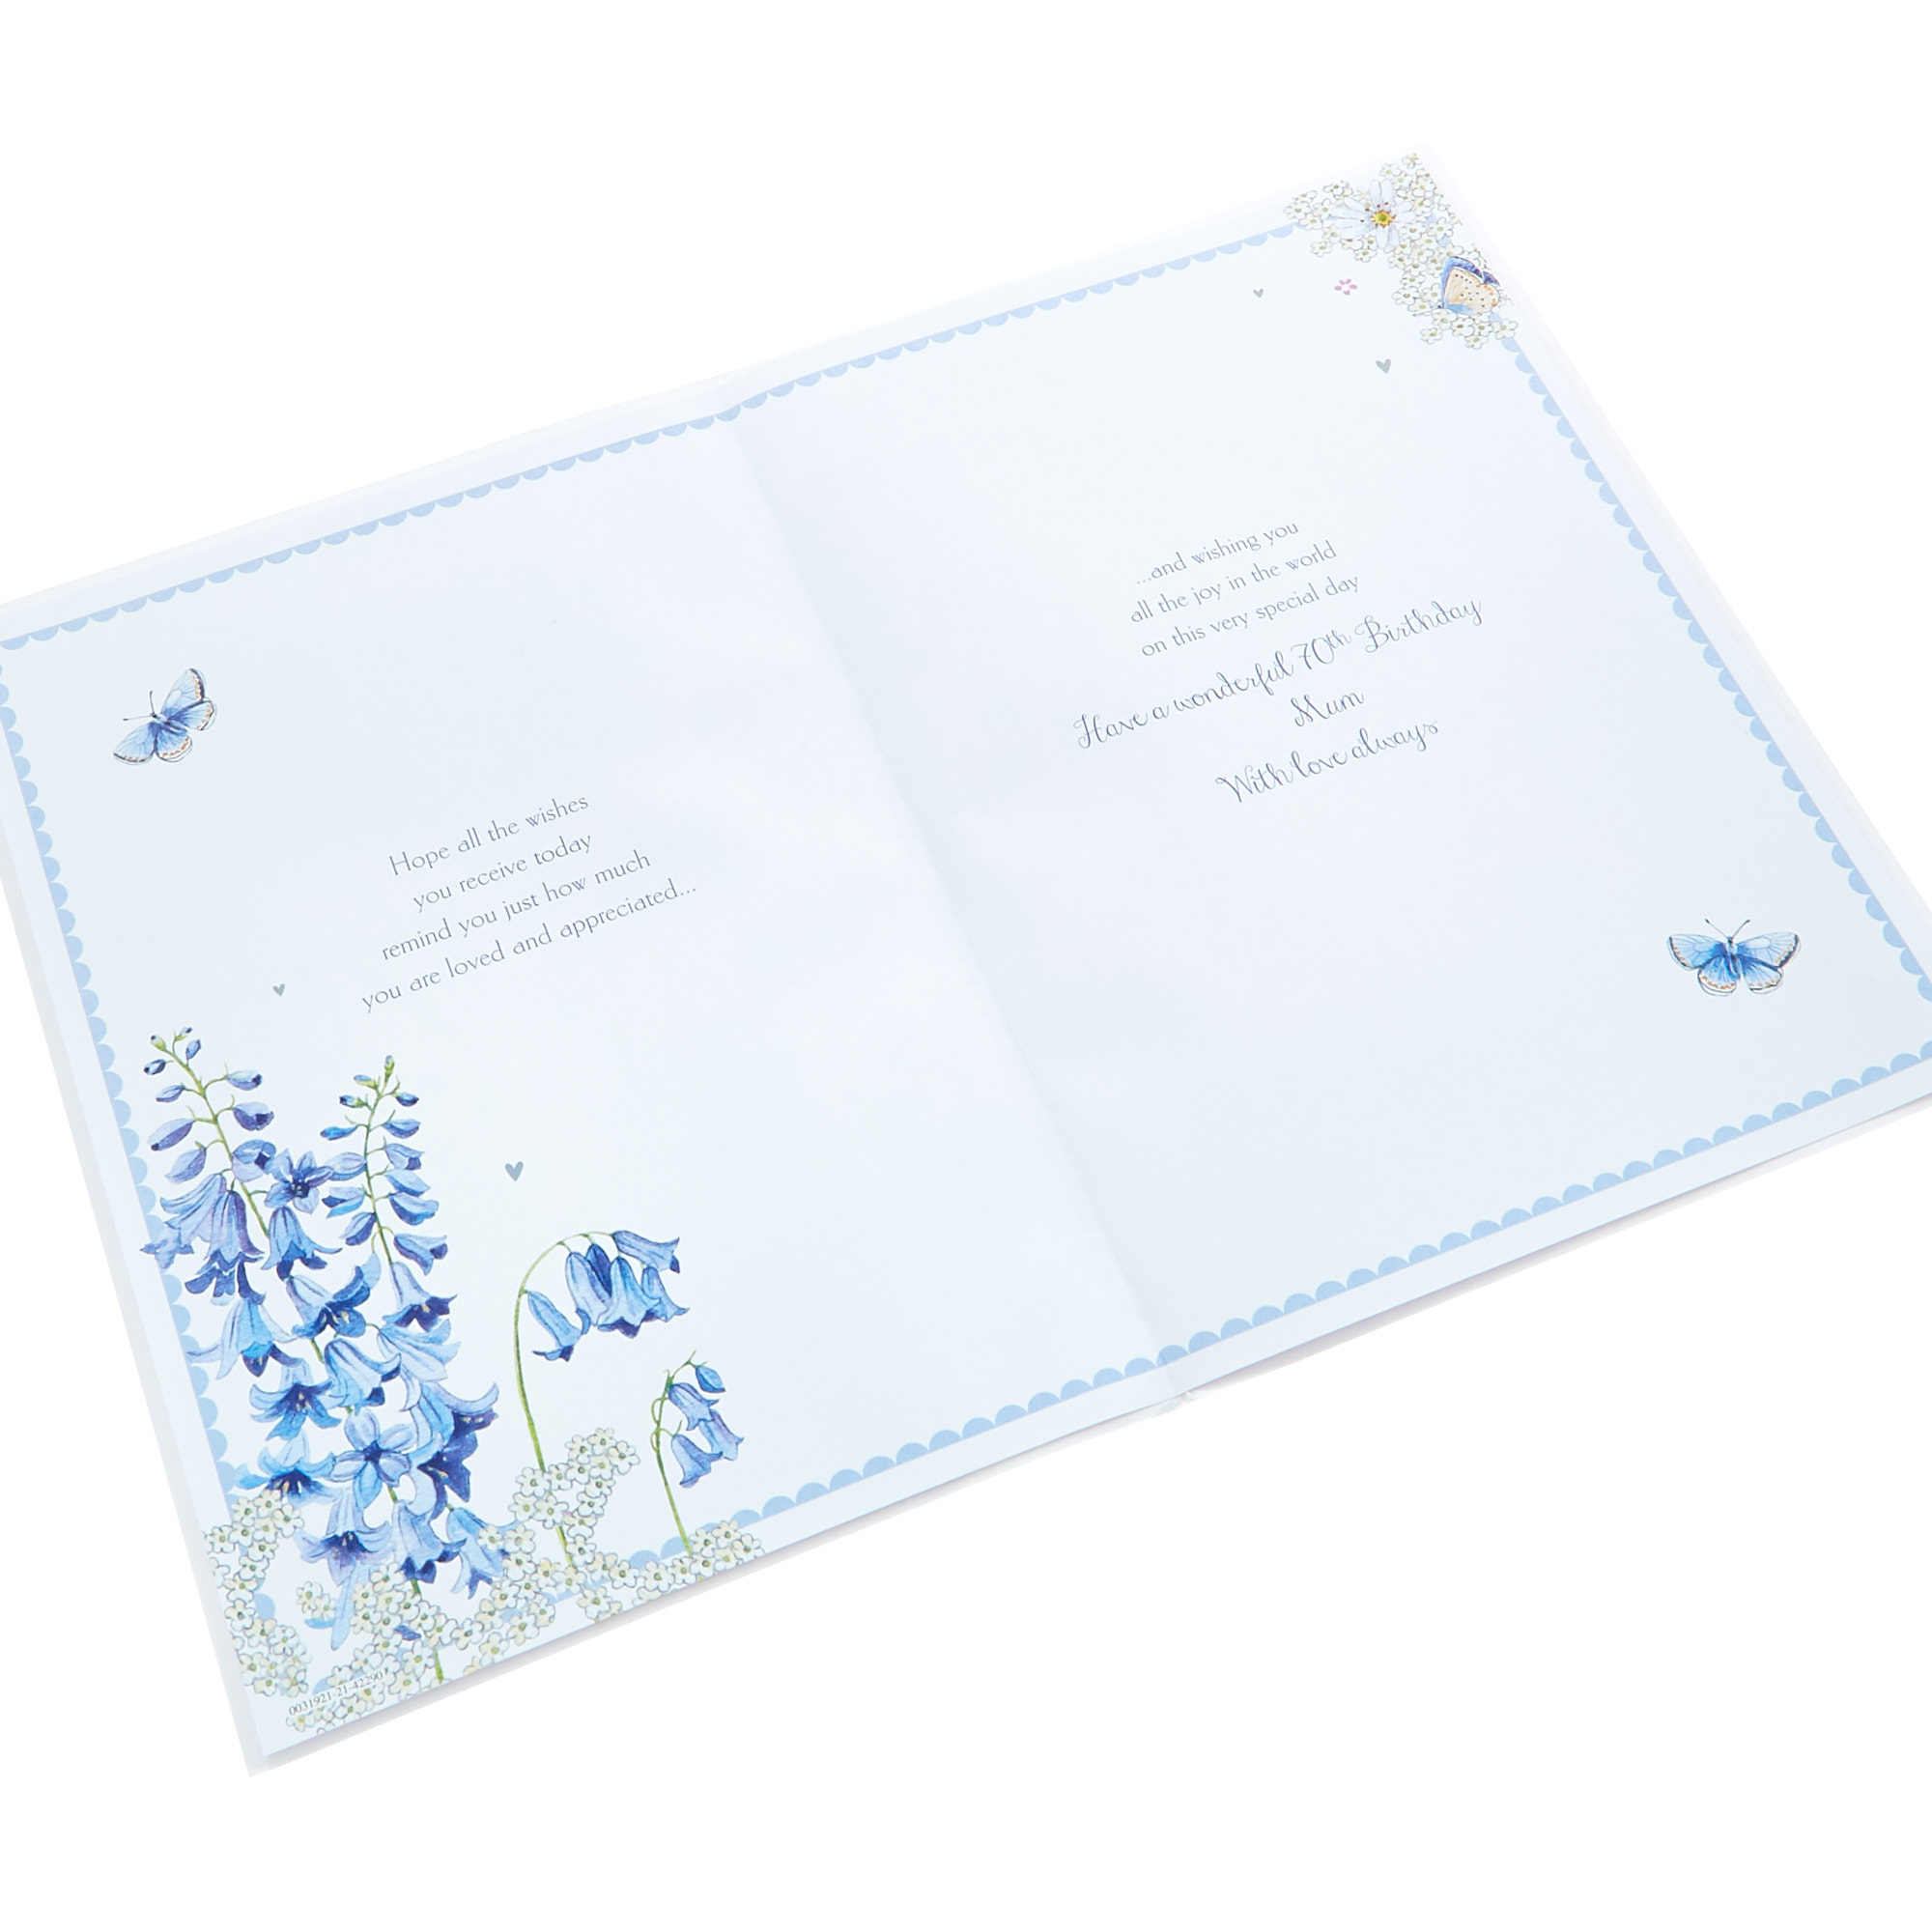 70th Birthday Card - Wonderful Mum Bluebells 